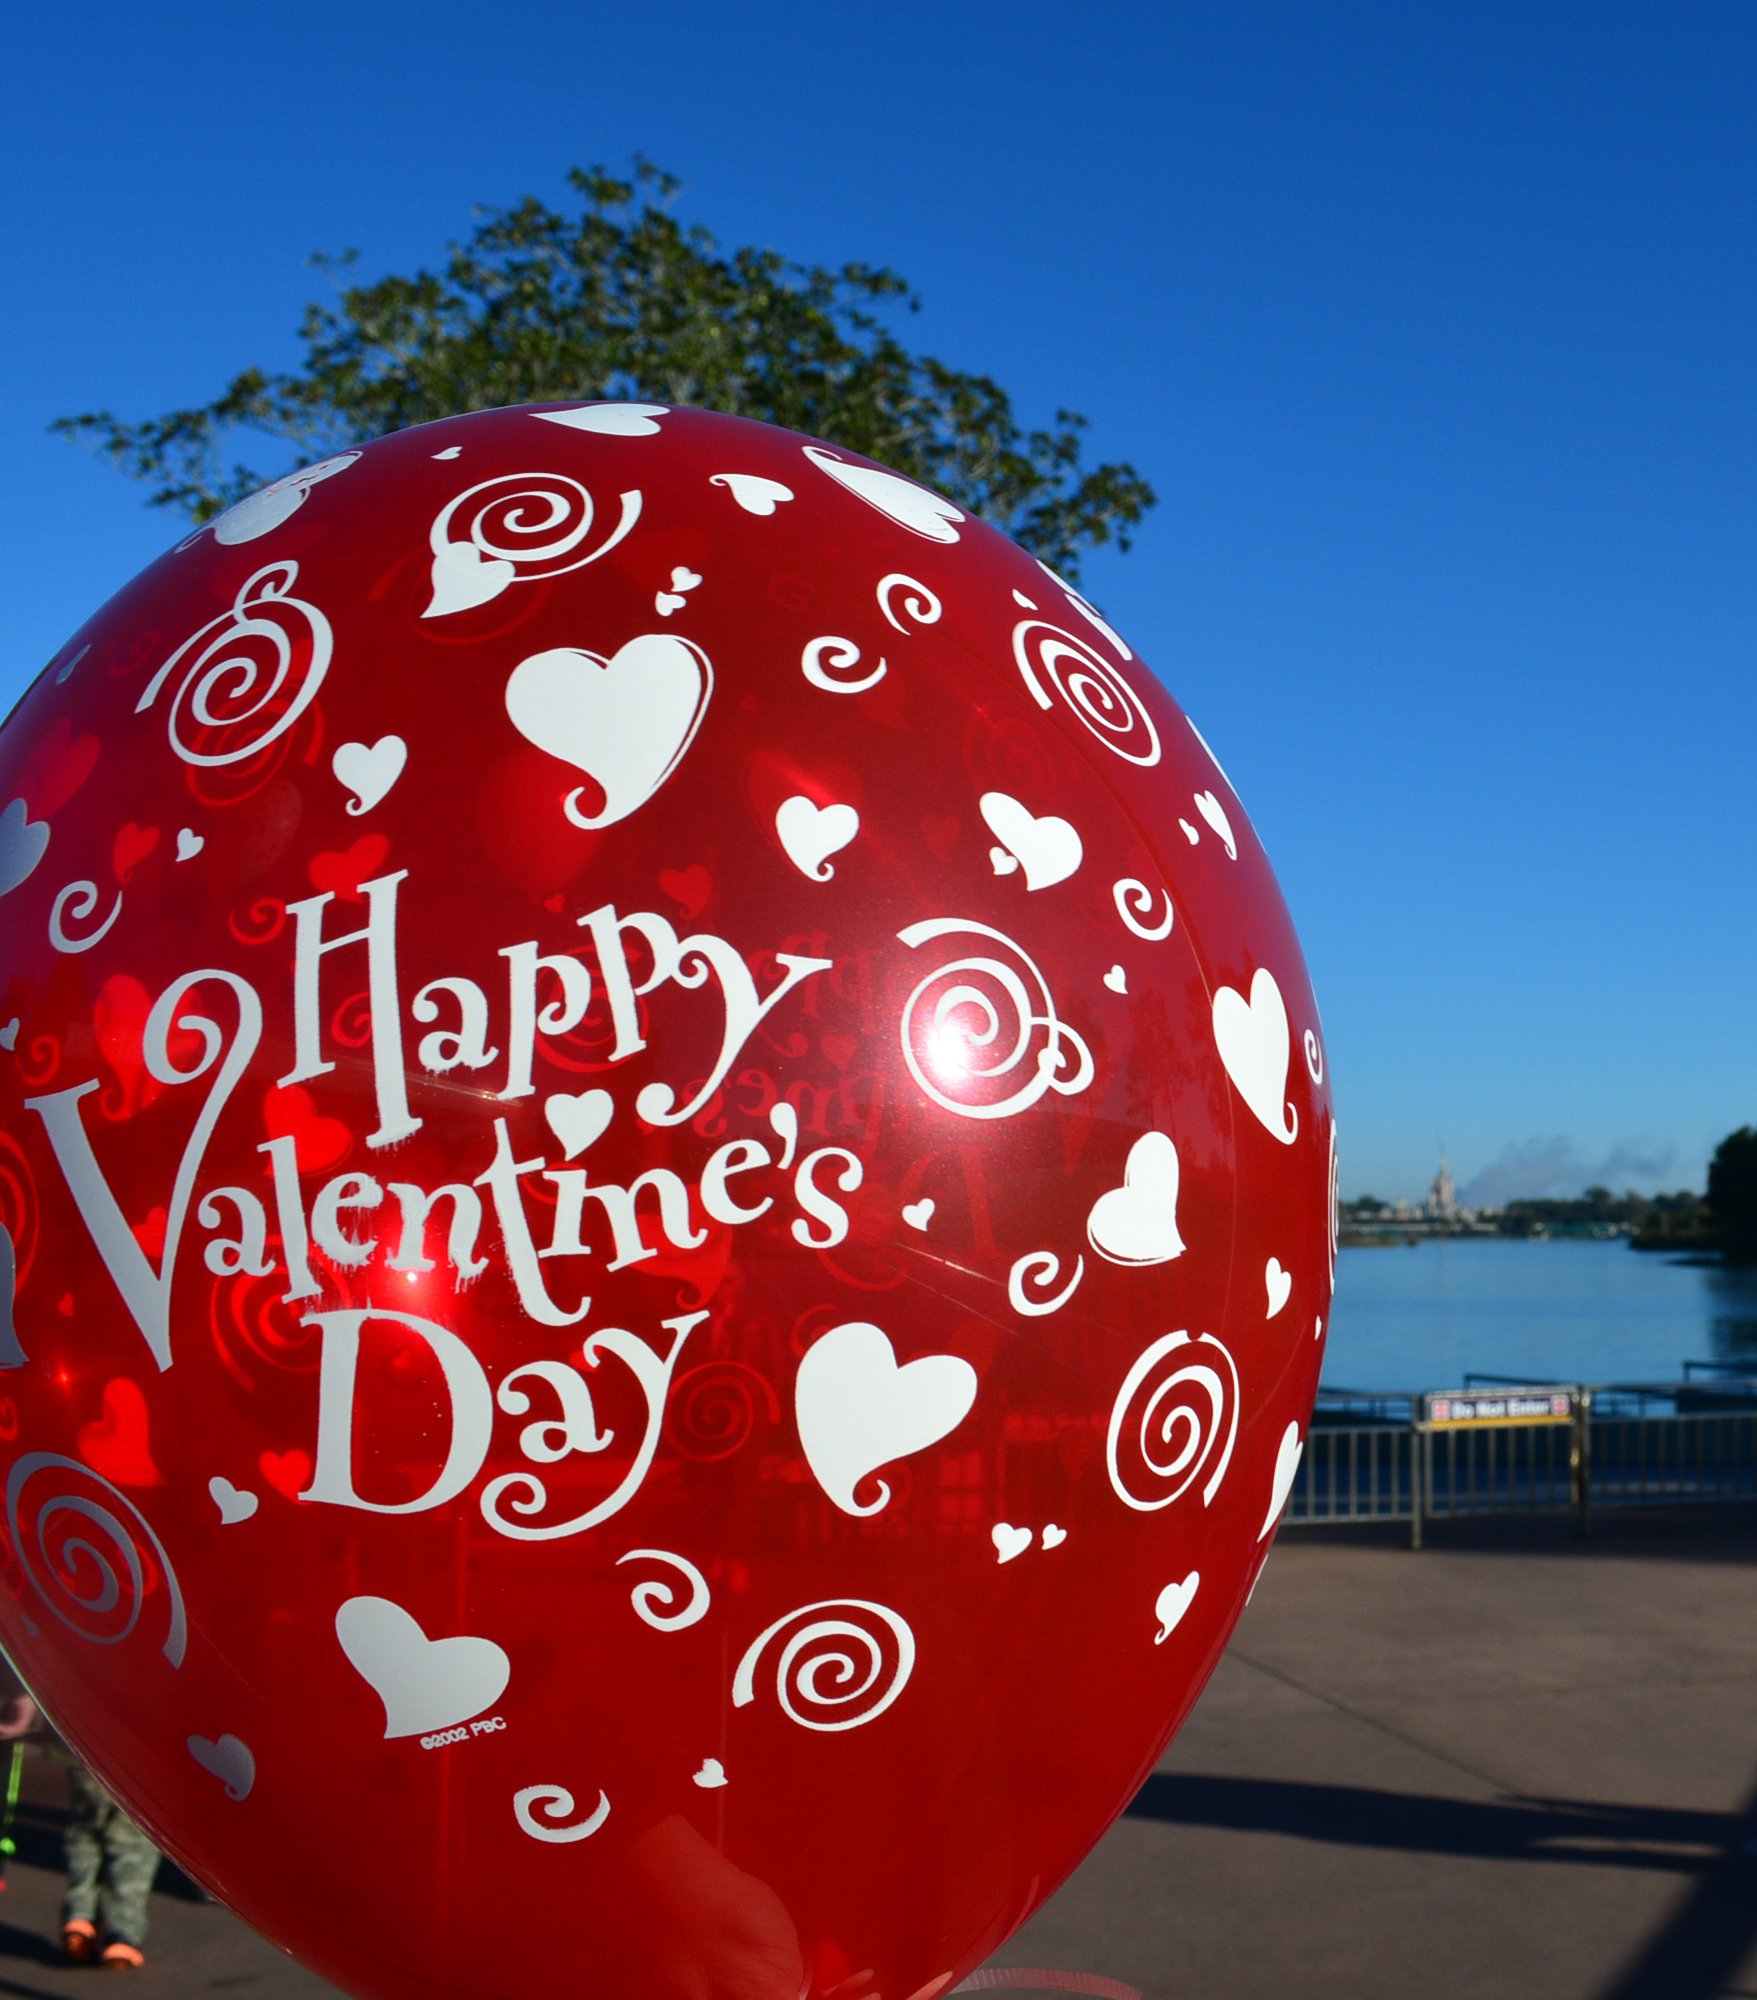 Walt Disney World, Magic Kingdom, Valentines Day